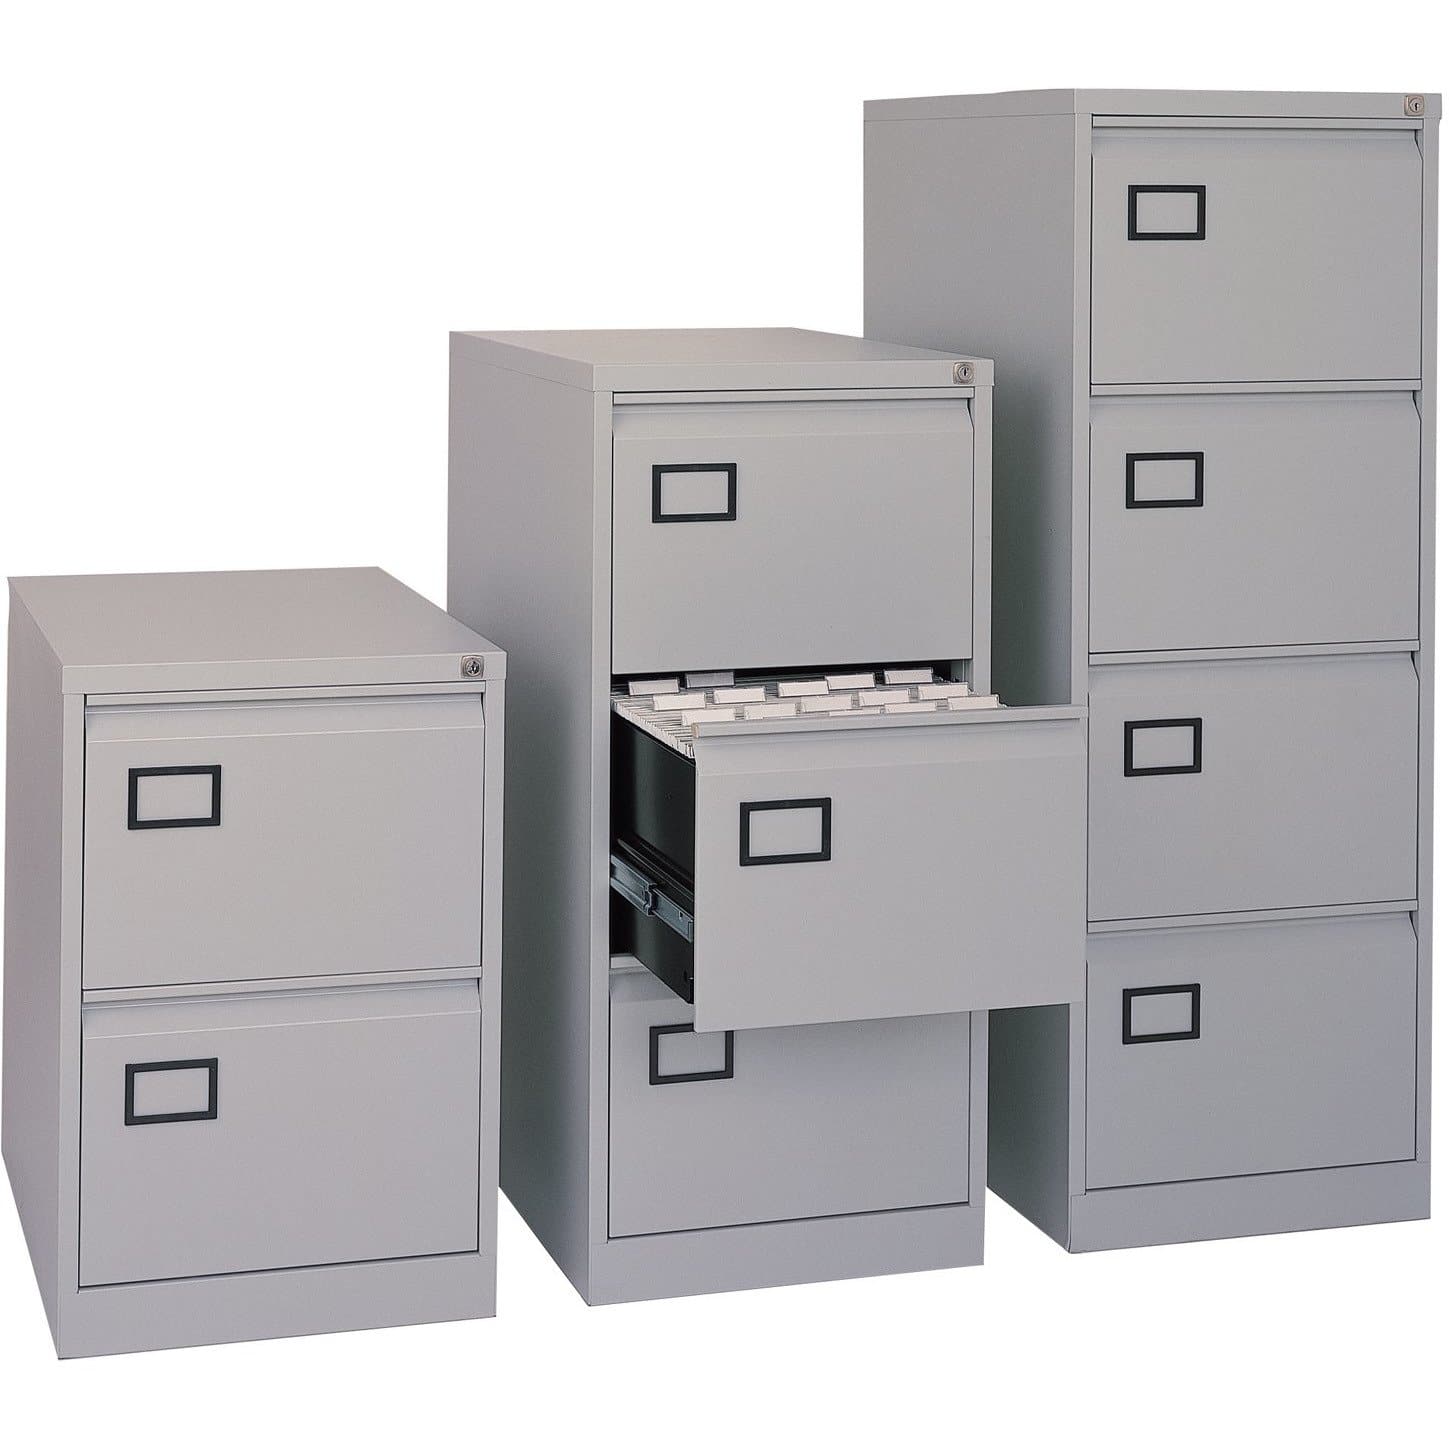 filing cabinets on white bakground